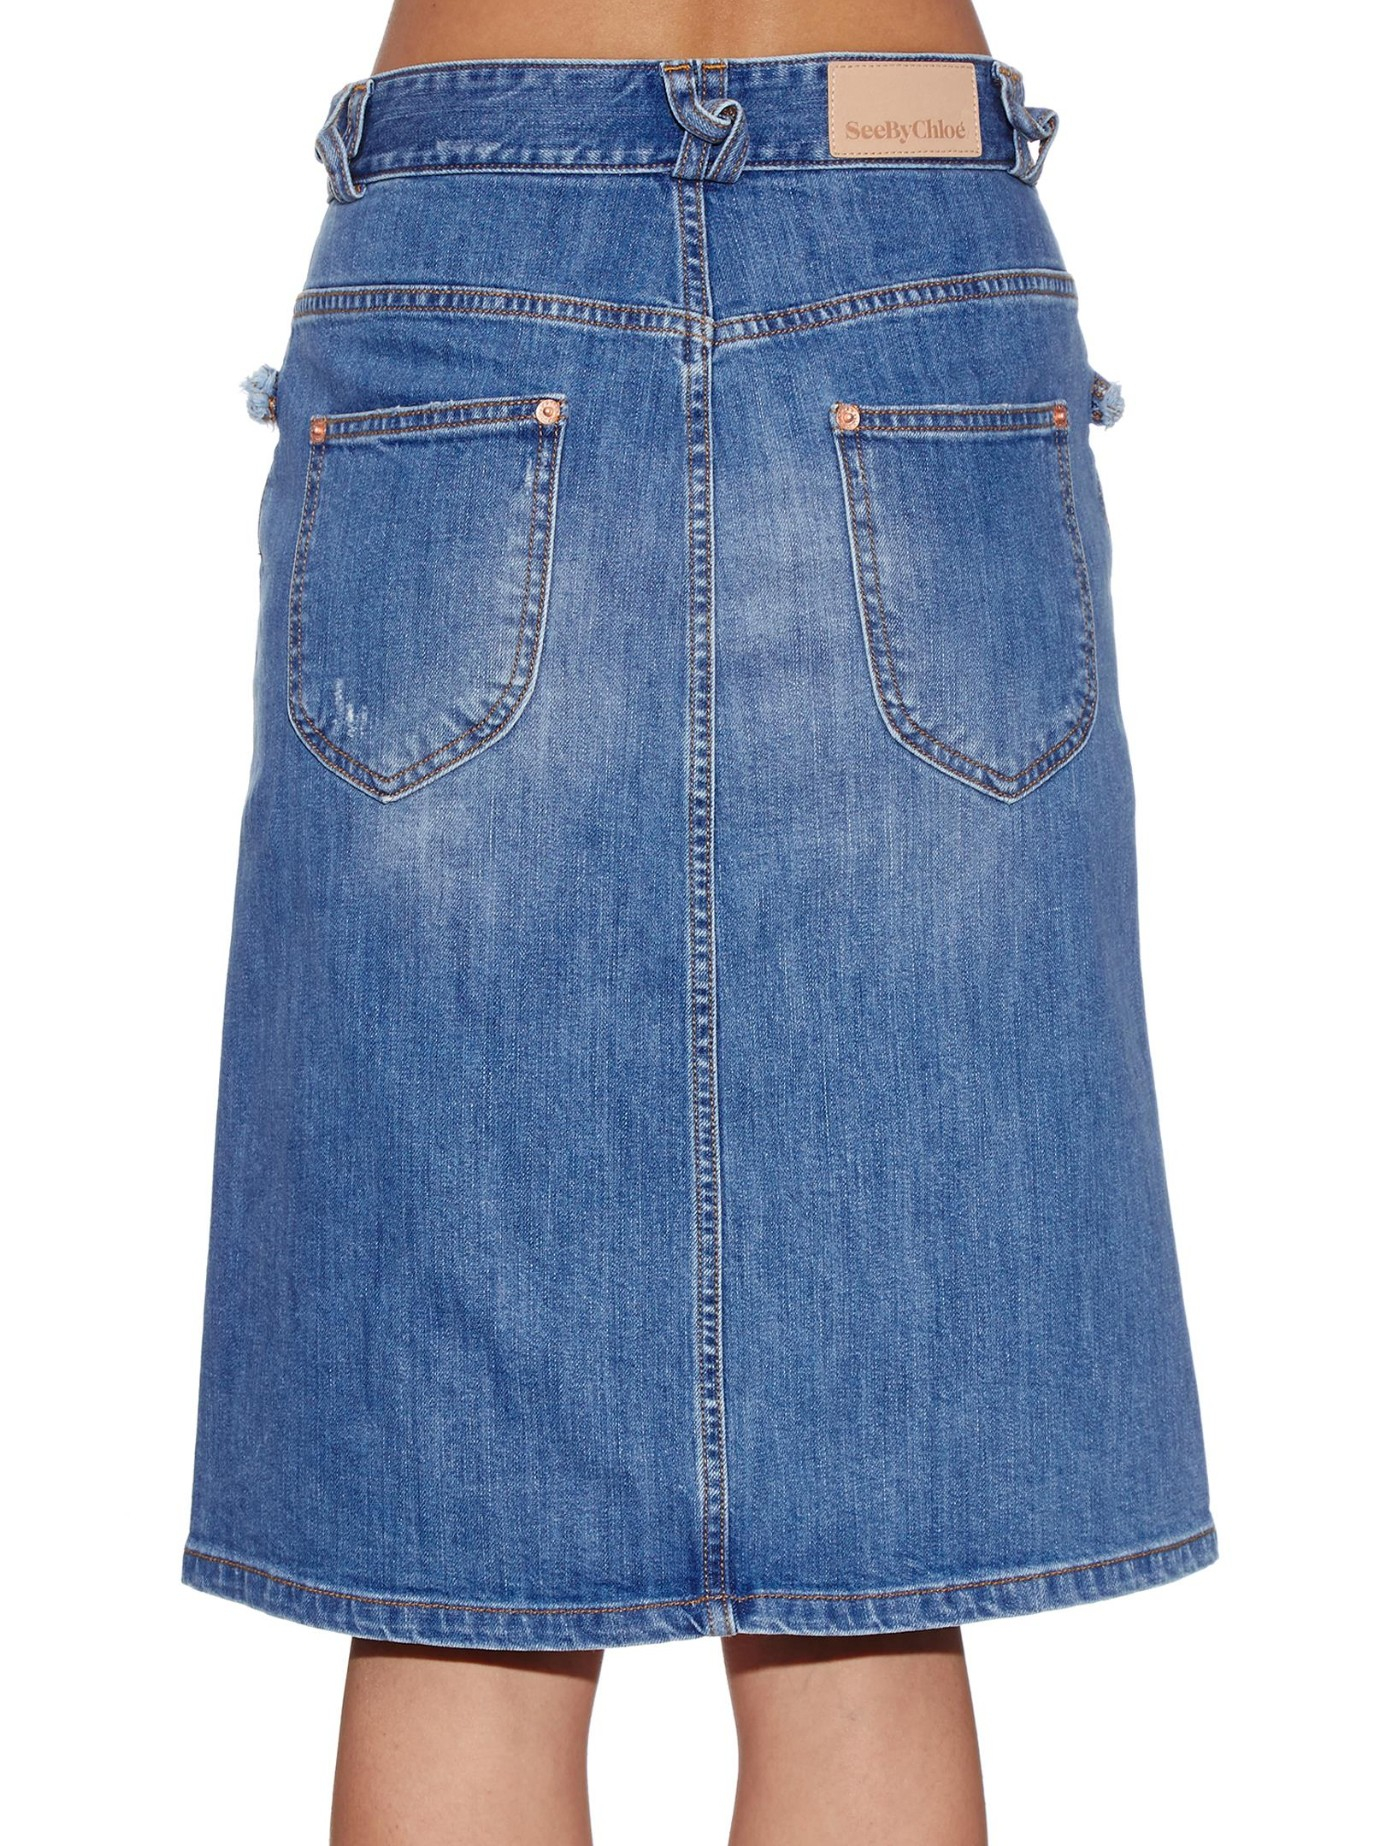 See By Chloé Braid-Detail Denim Skirt in Blue - Lyst